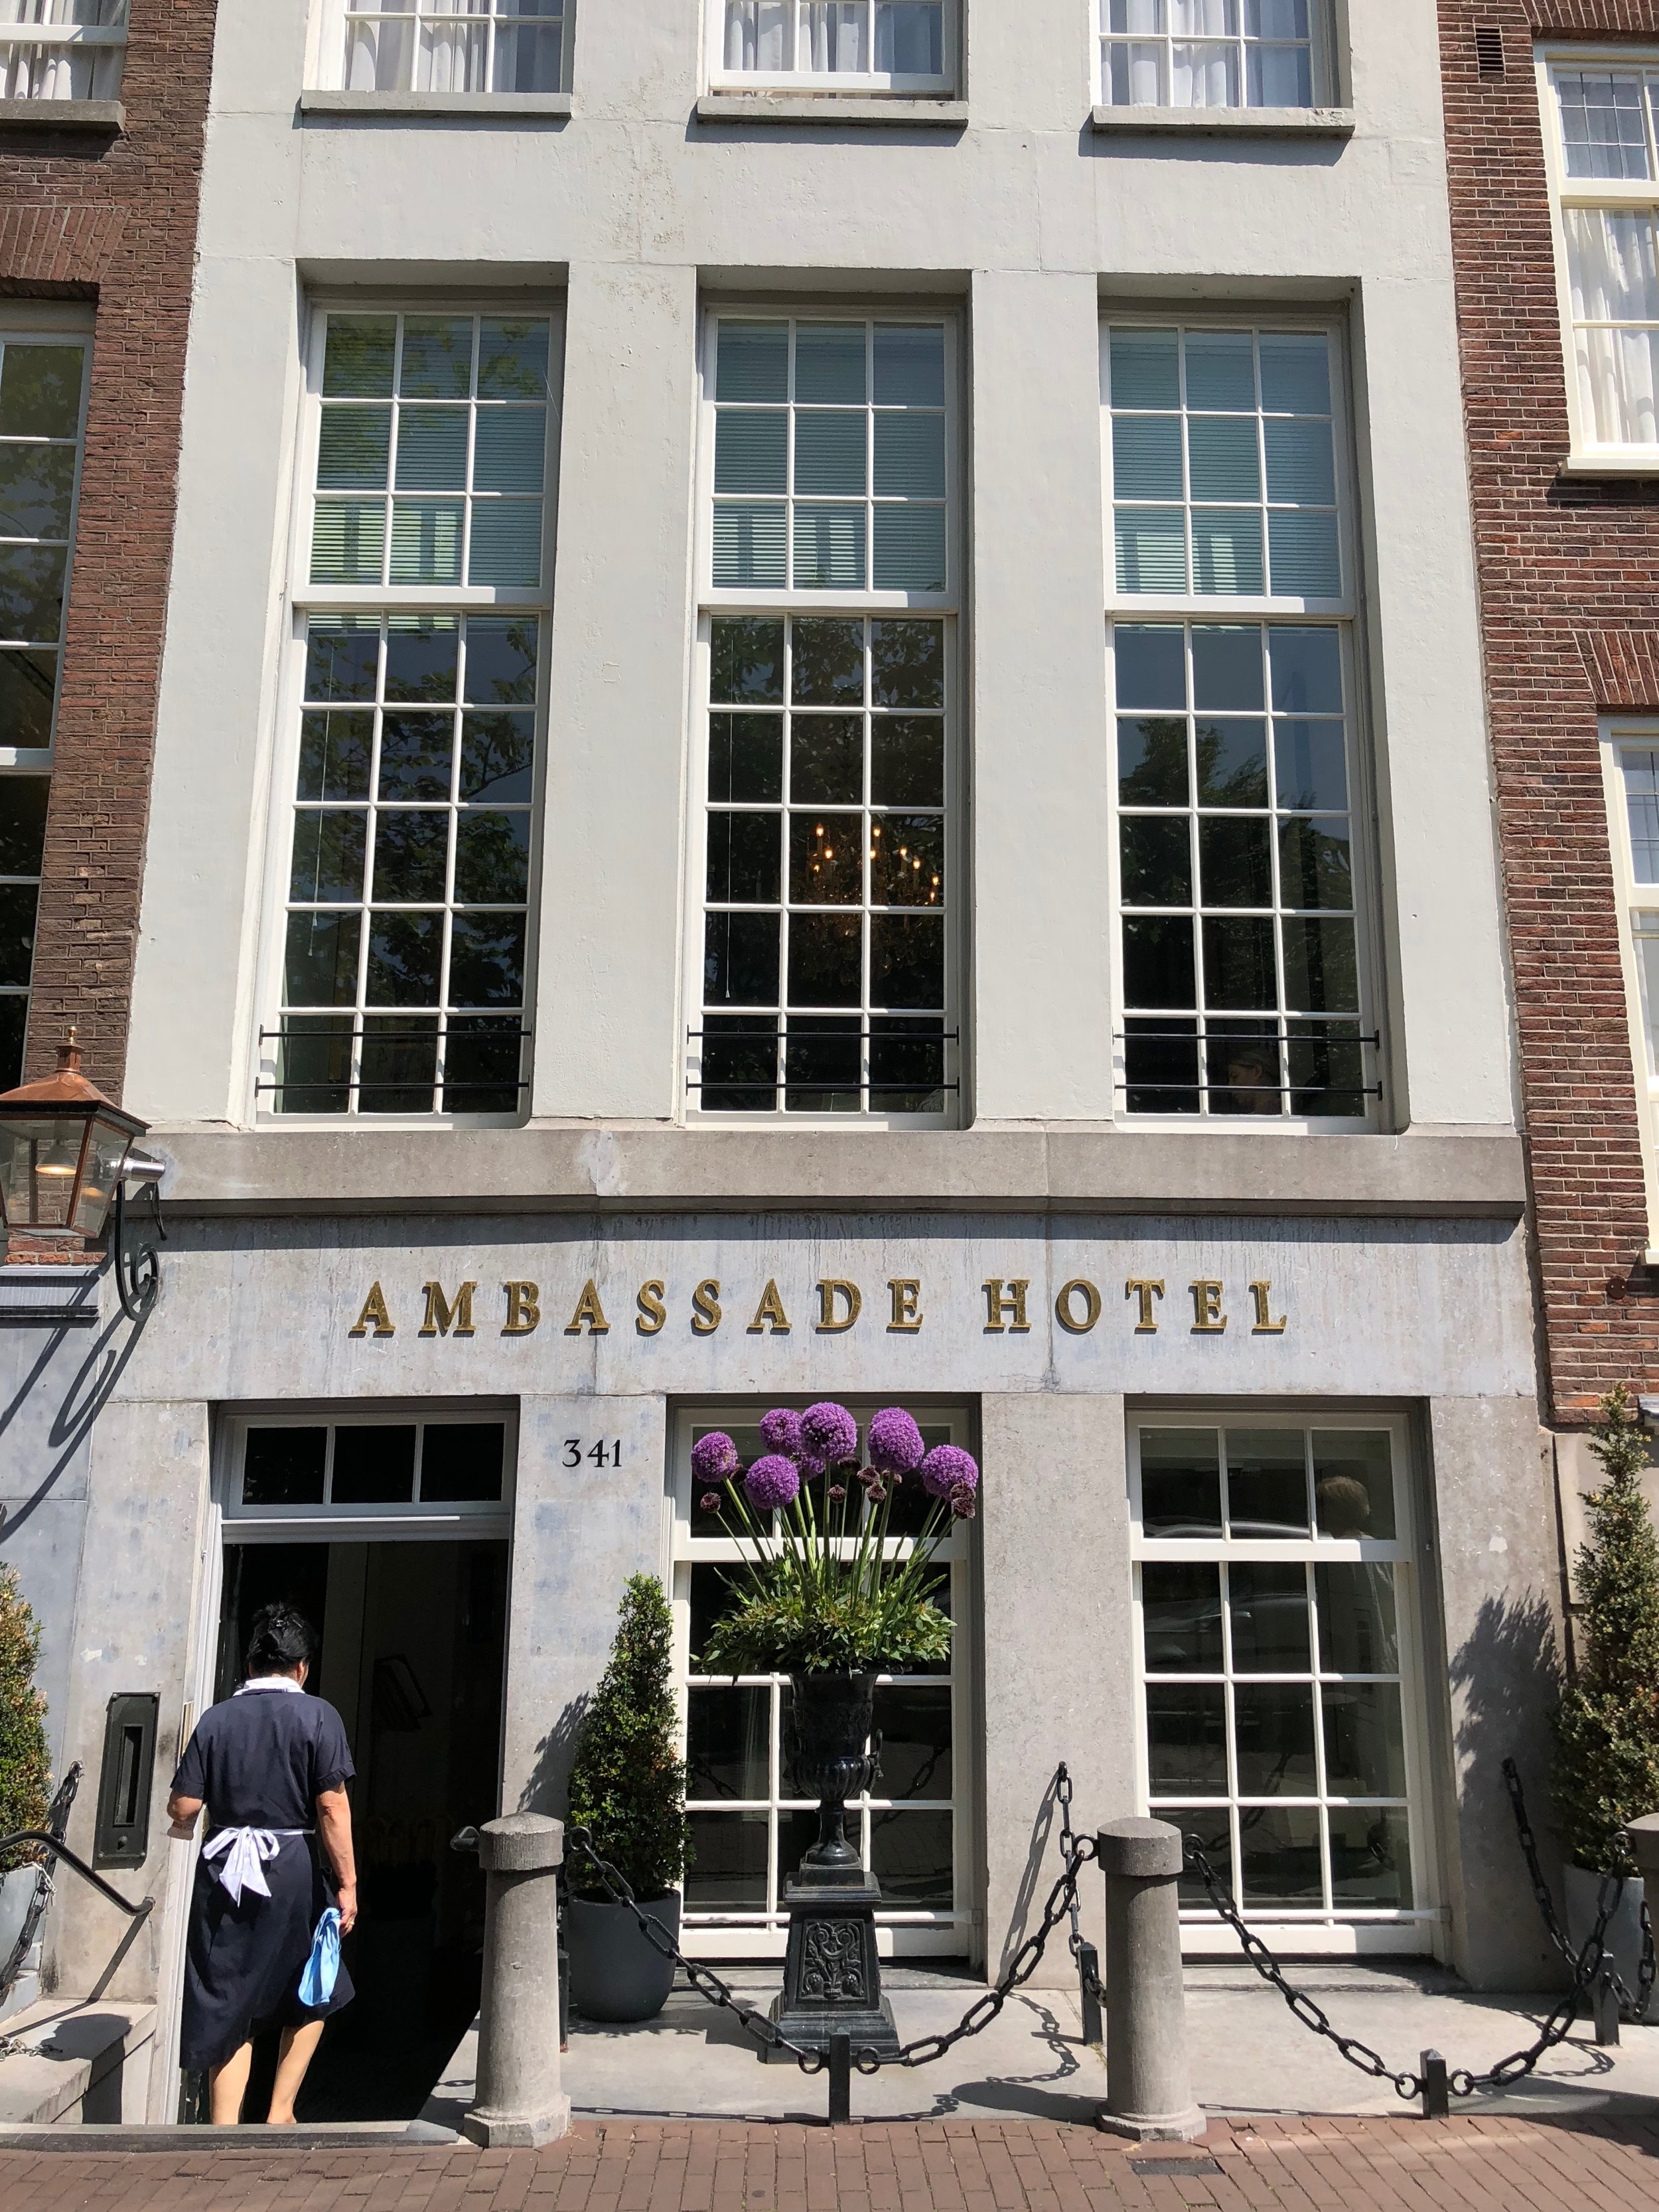 The Ambassade Hotel, Amsterdam